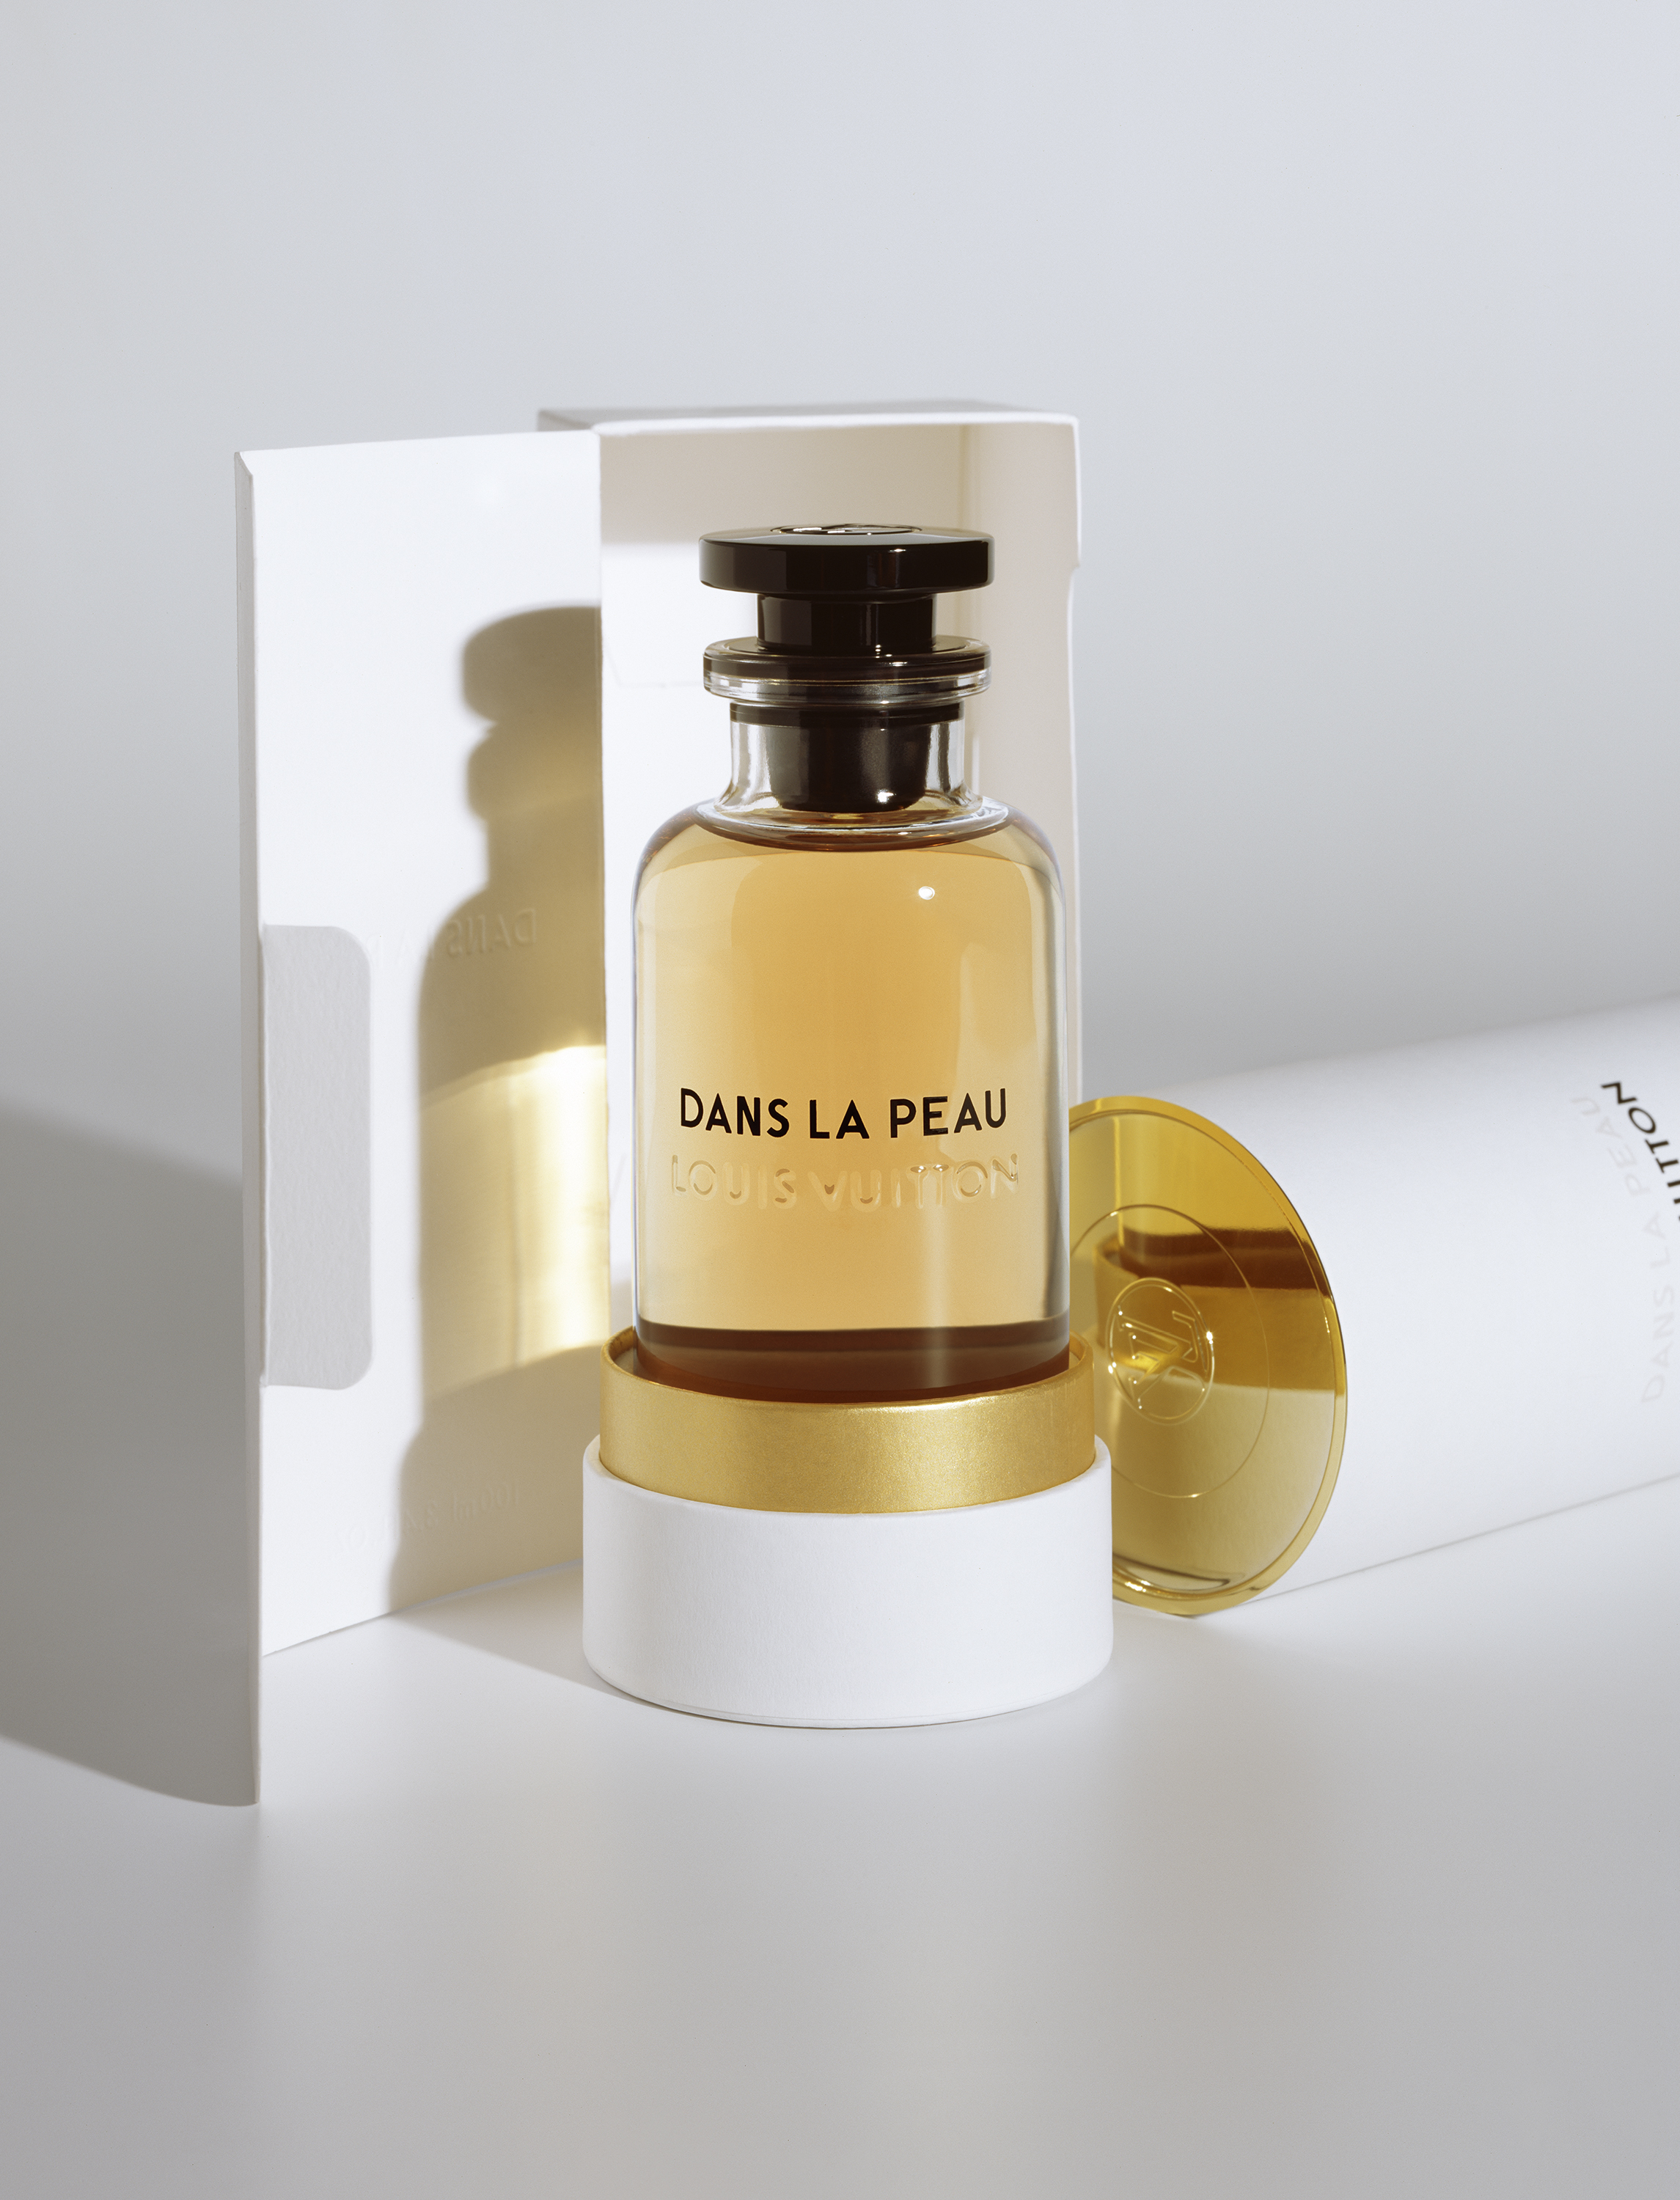 La surprenante collection de parfums de Louis Vuitton - Gala